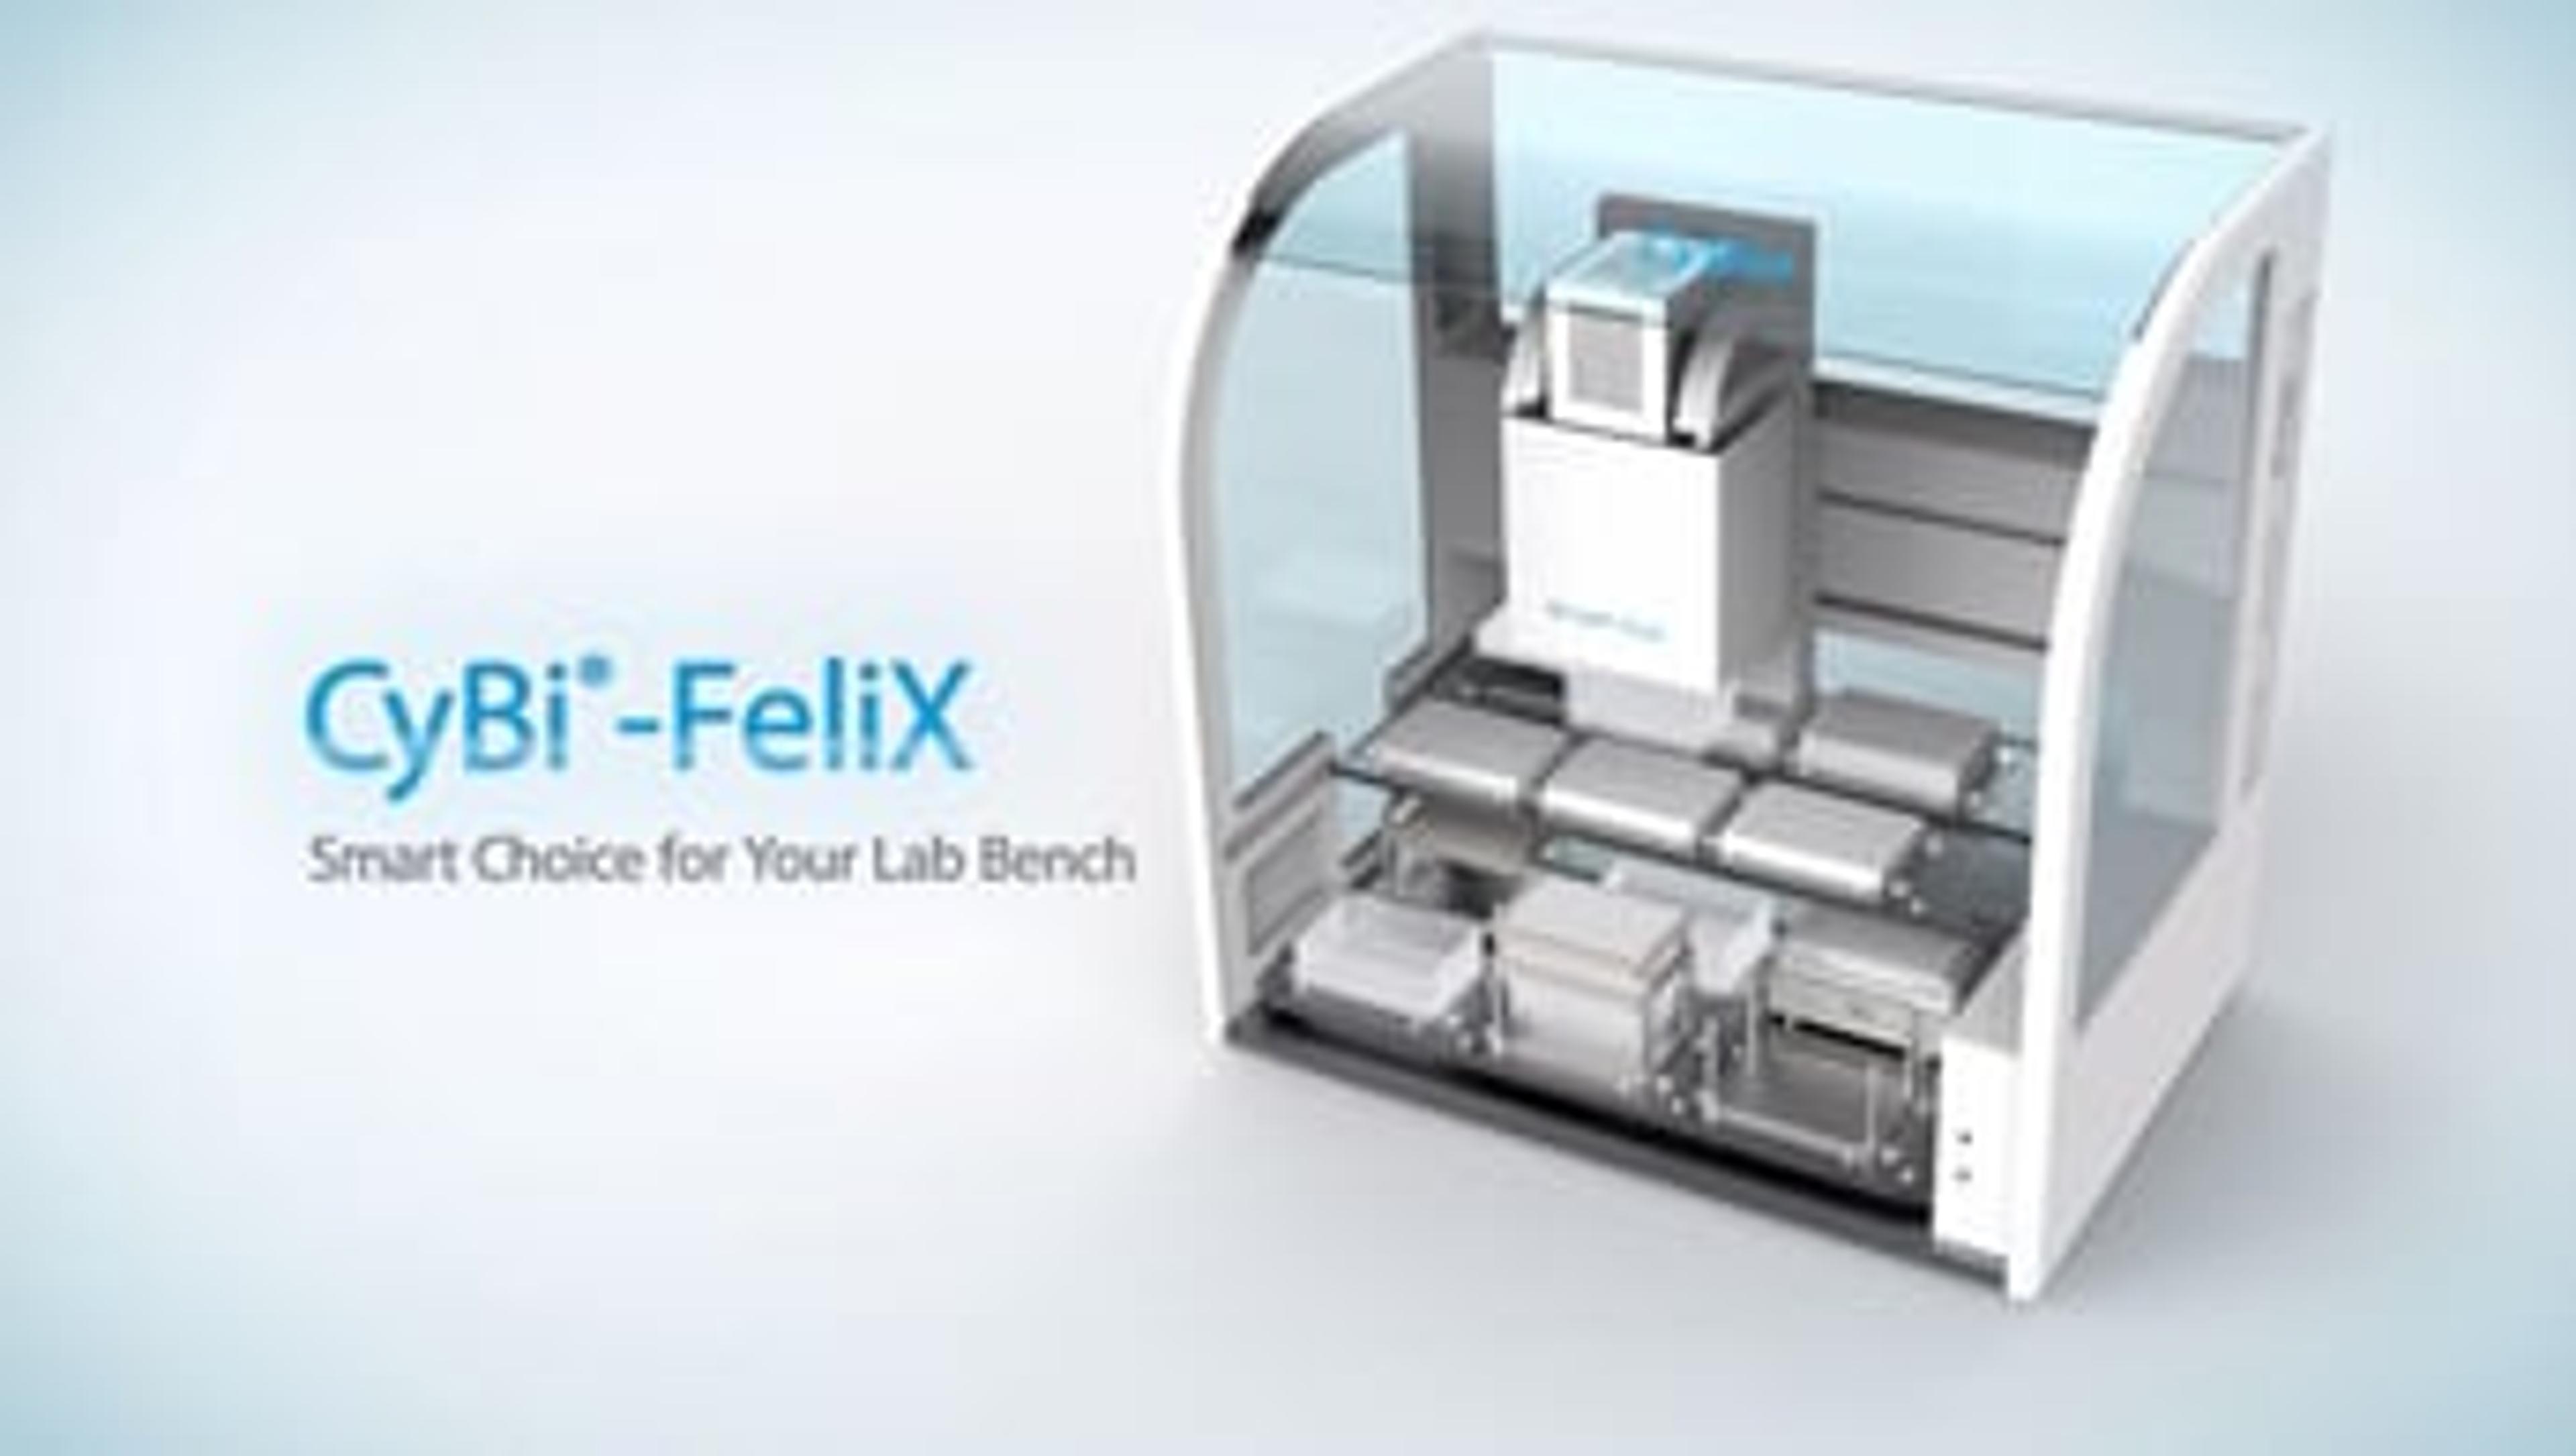 Cy-Bi®-Felix: Automated Liquid Handling Platform